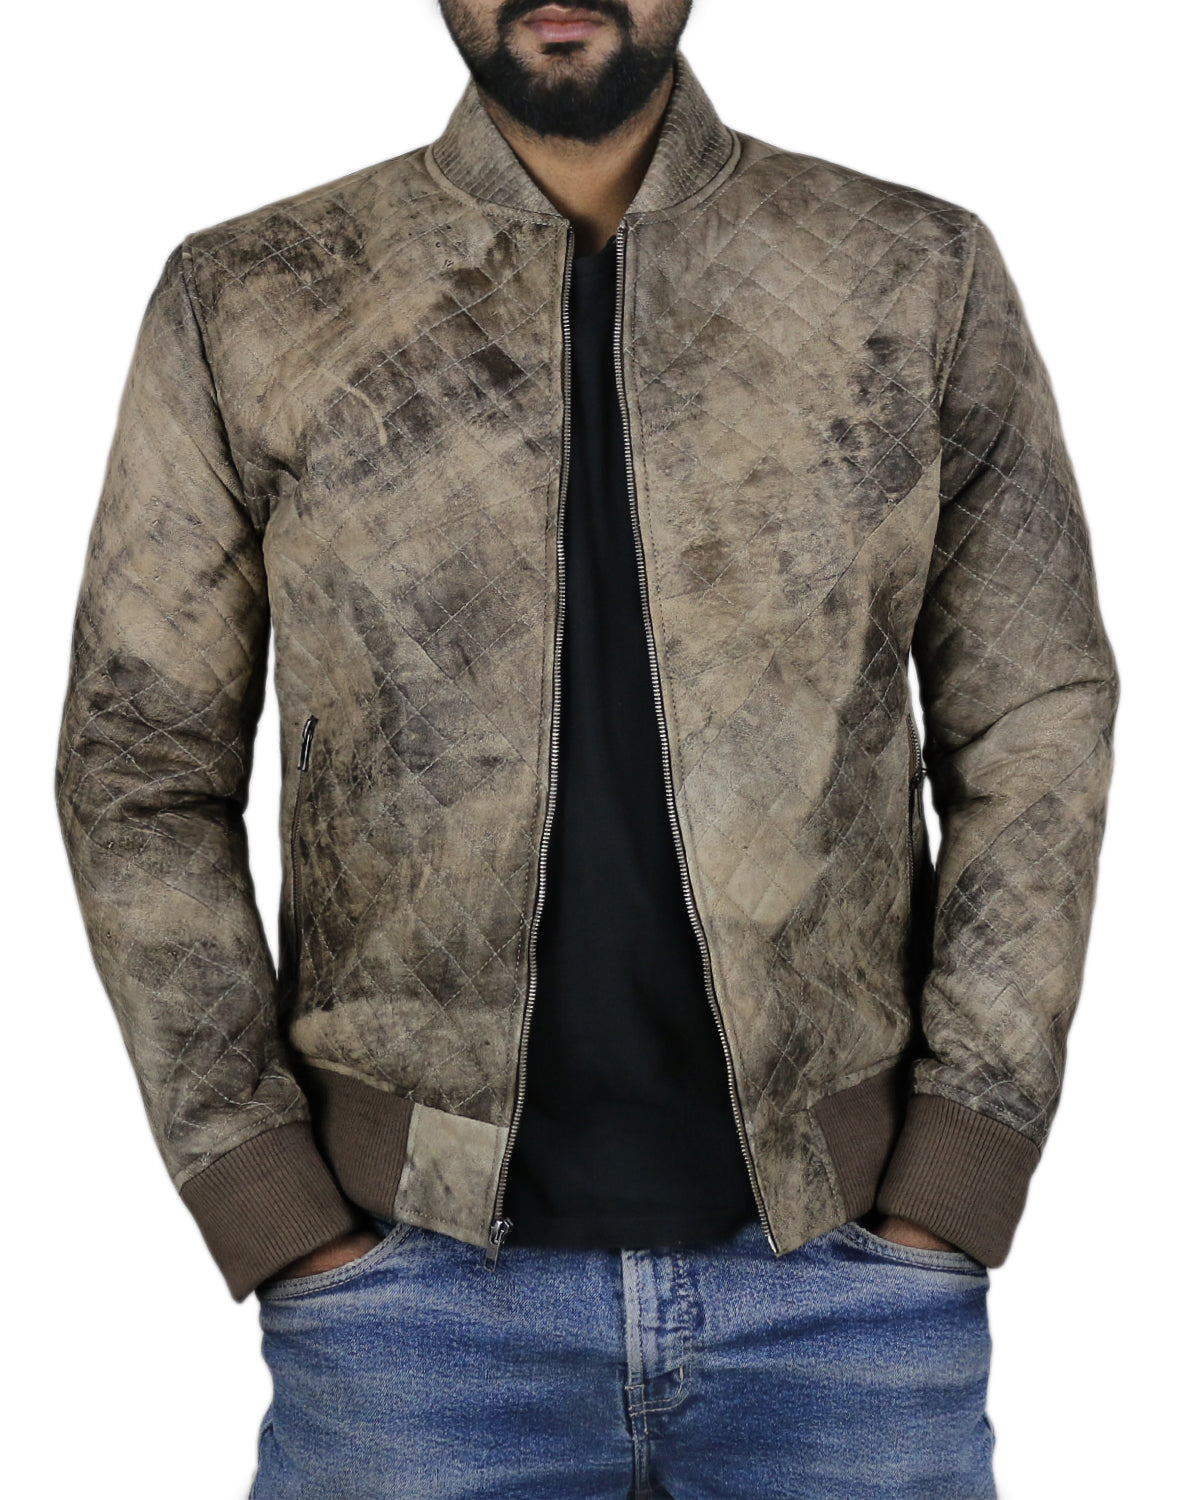 Leather Jackets Hub Mens Genuine Lambskin Leather Jacket (Black, Quilted Jacket) - 1801006